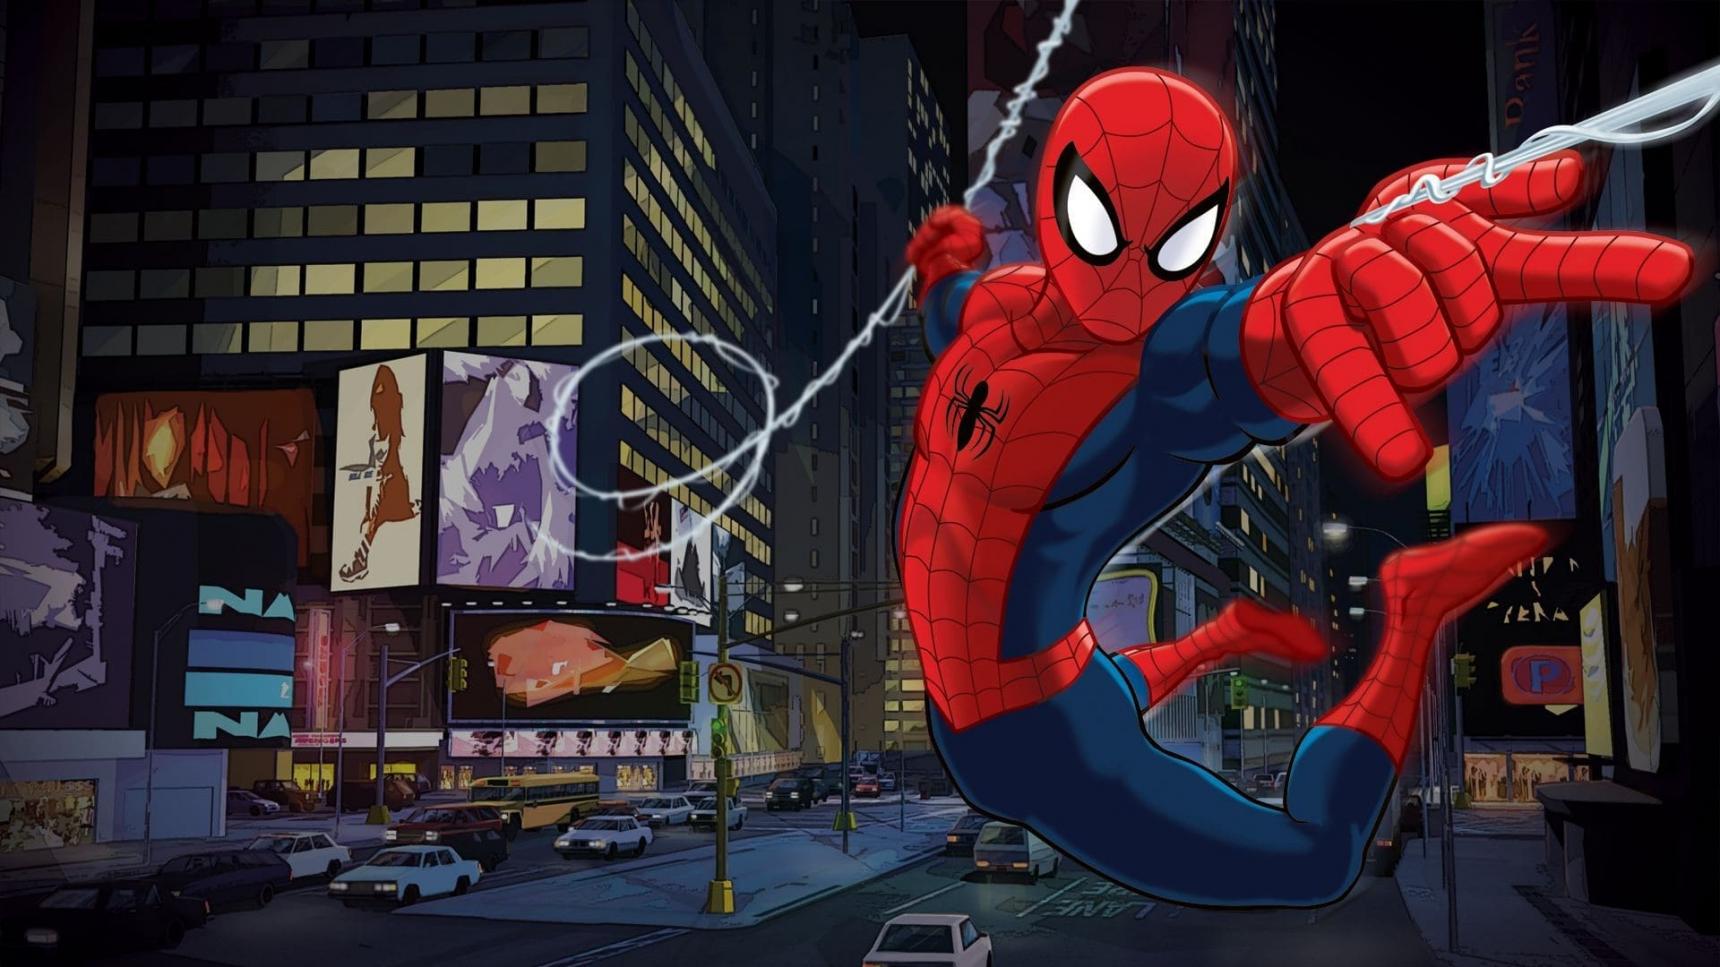 Poster del episodio 3 de Ultimate Spider-Man online